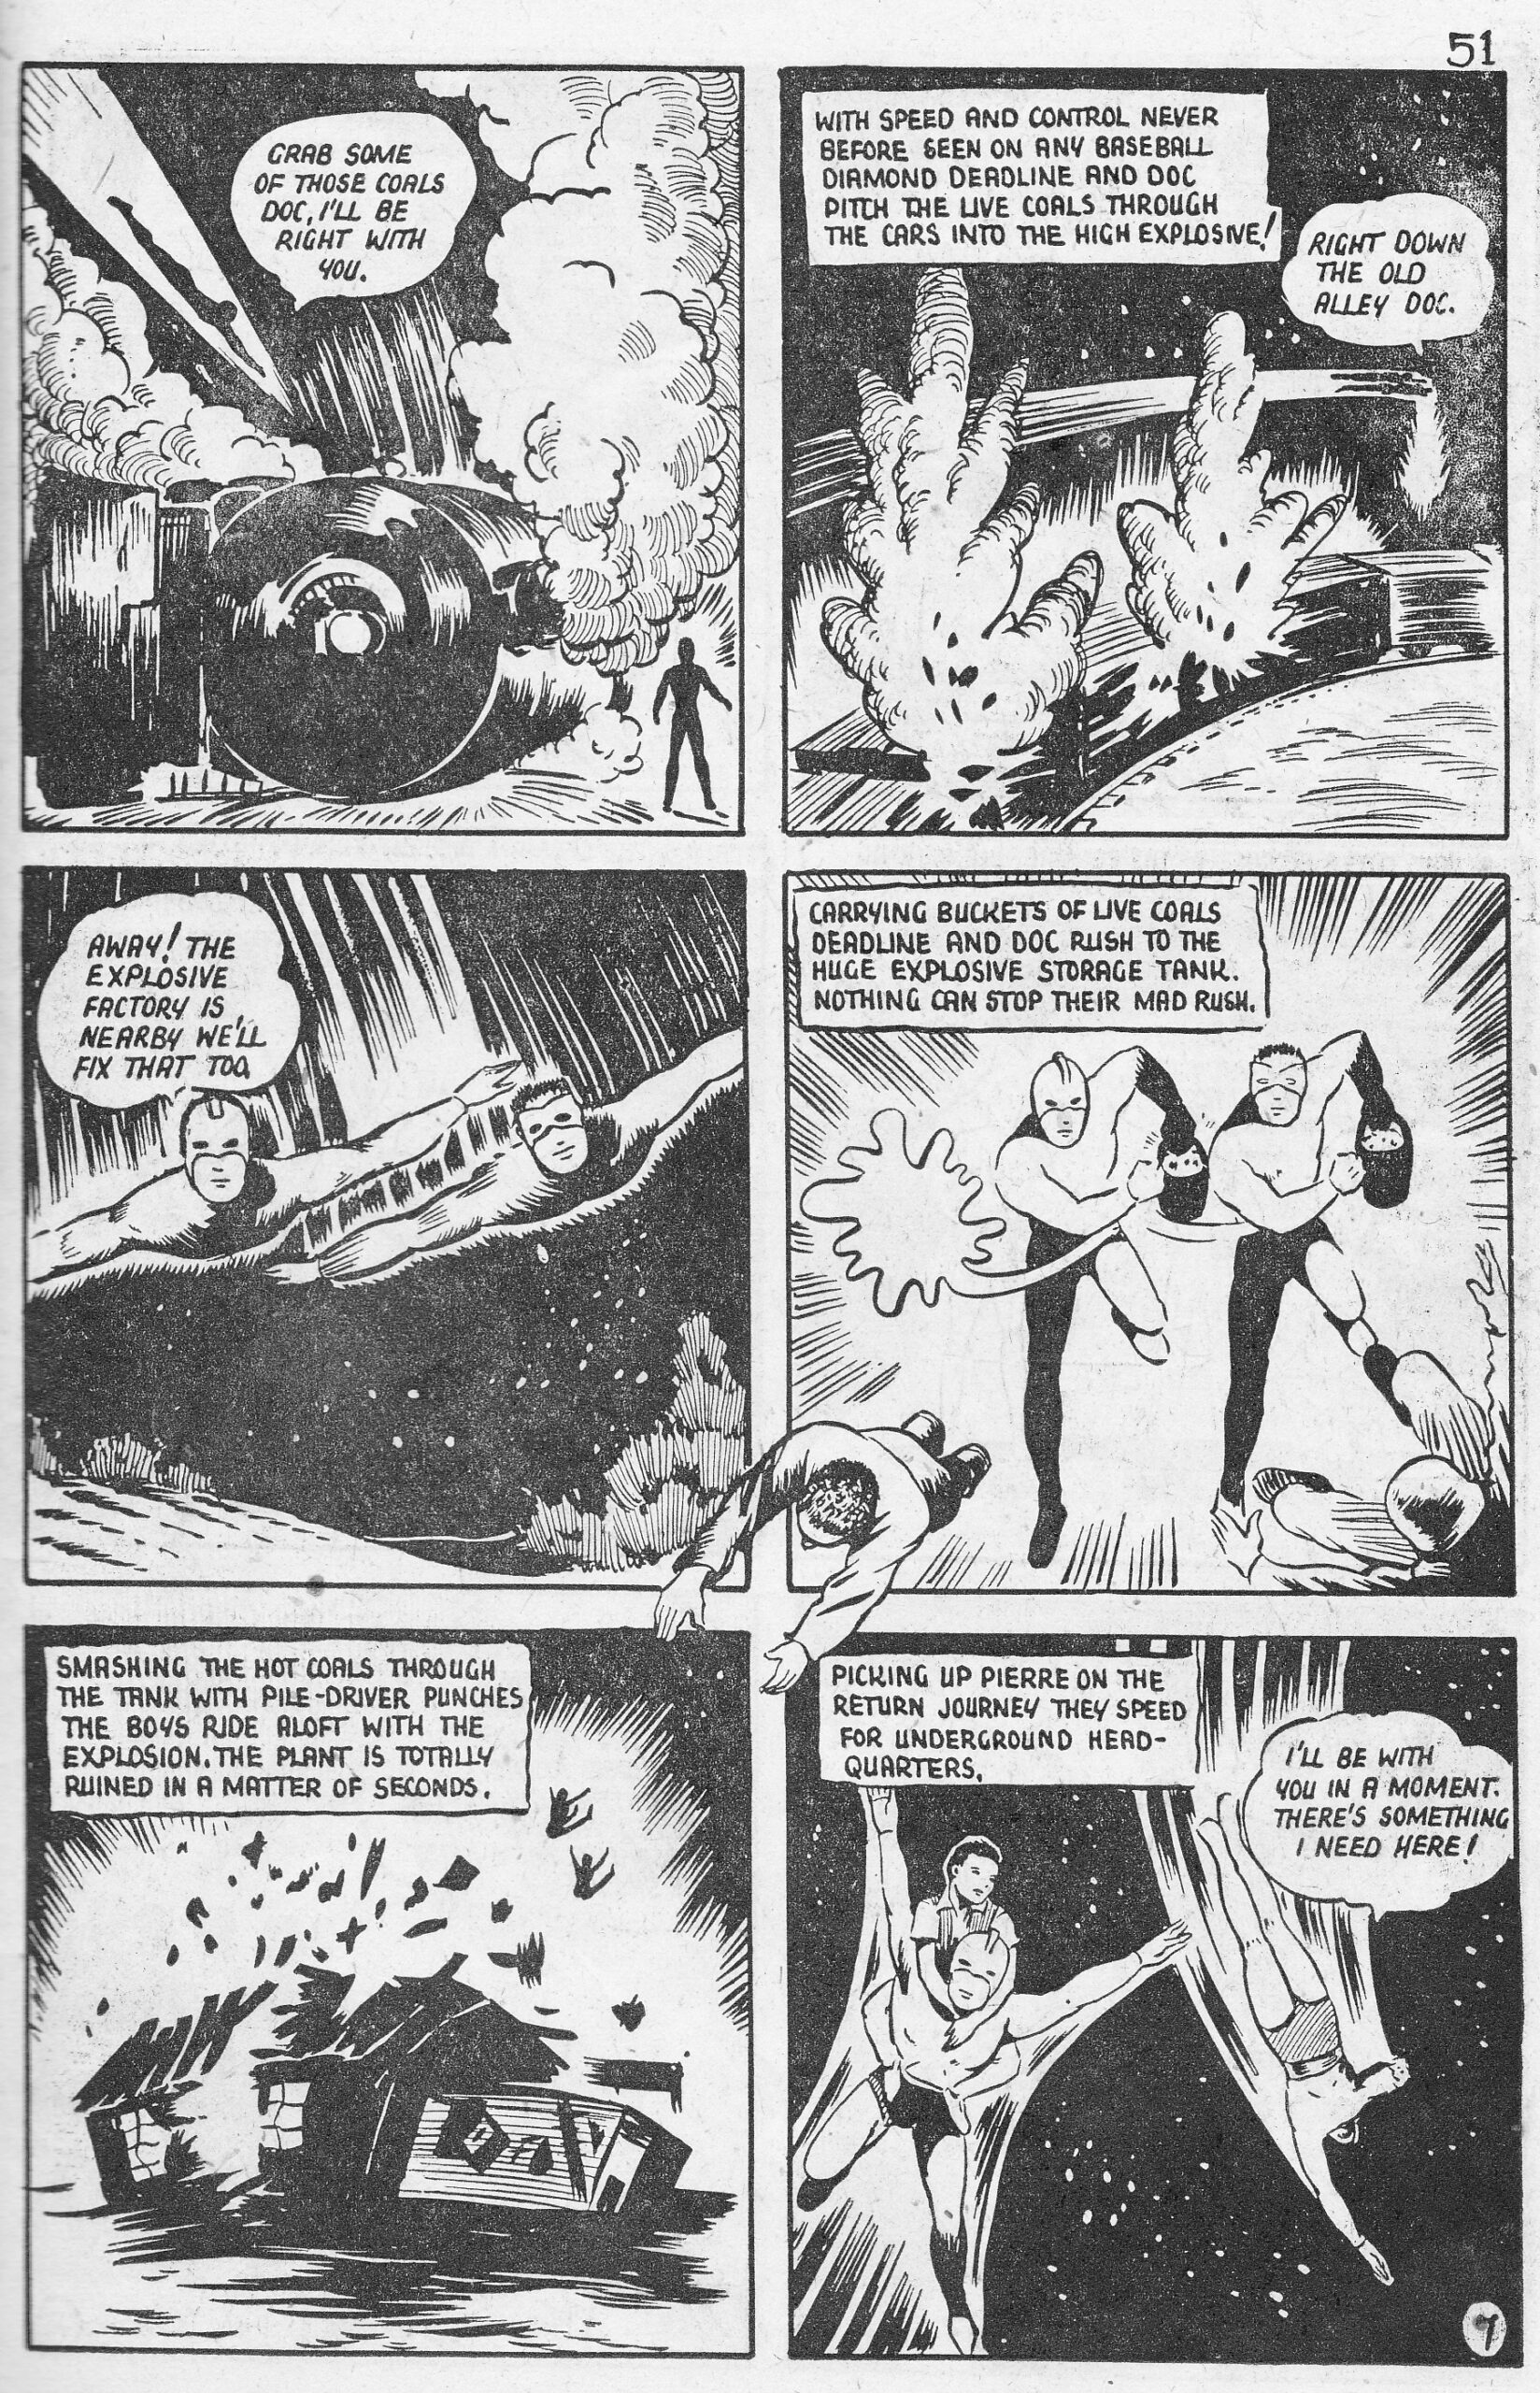 C:\Users\Robert\Documents\CARTOONING ILLUSTRATION ANIMATION\IMAGE CARTOON\IMAGE CARTOON D\DEADLINE DICK, Three Aces Comics, 2-3, April 1943, 51.jpg